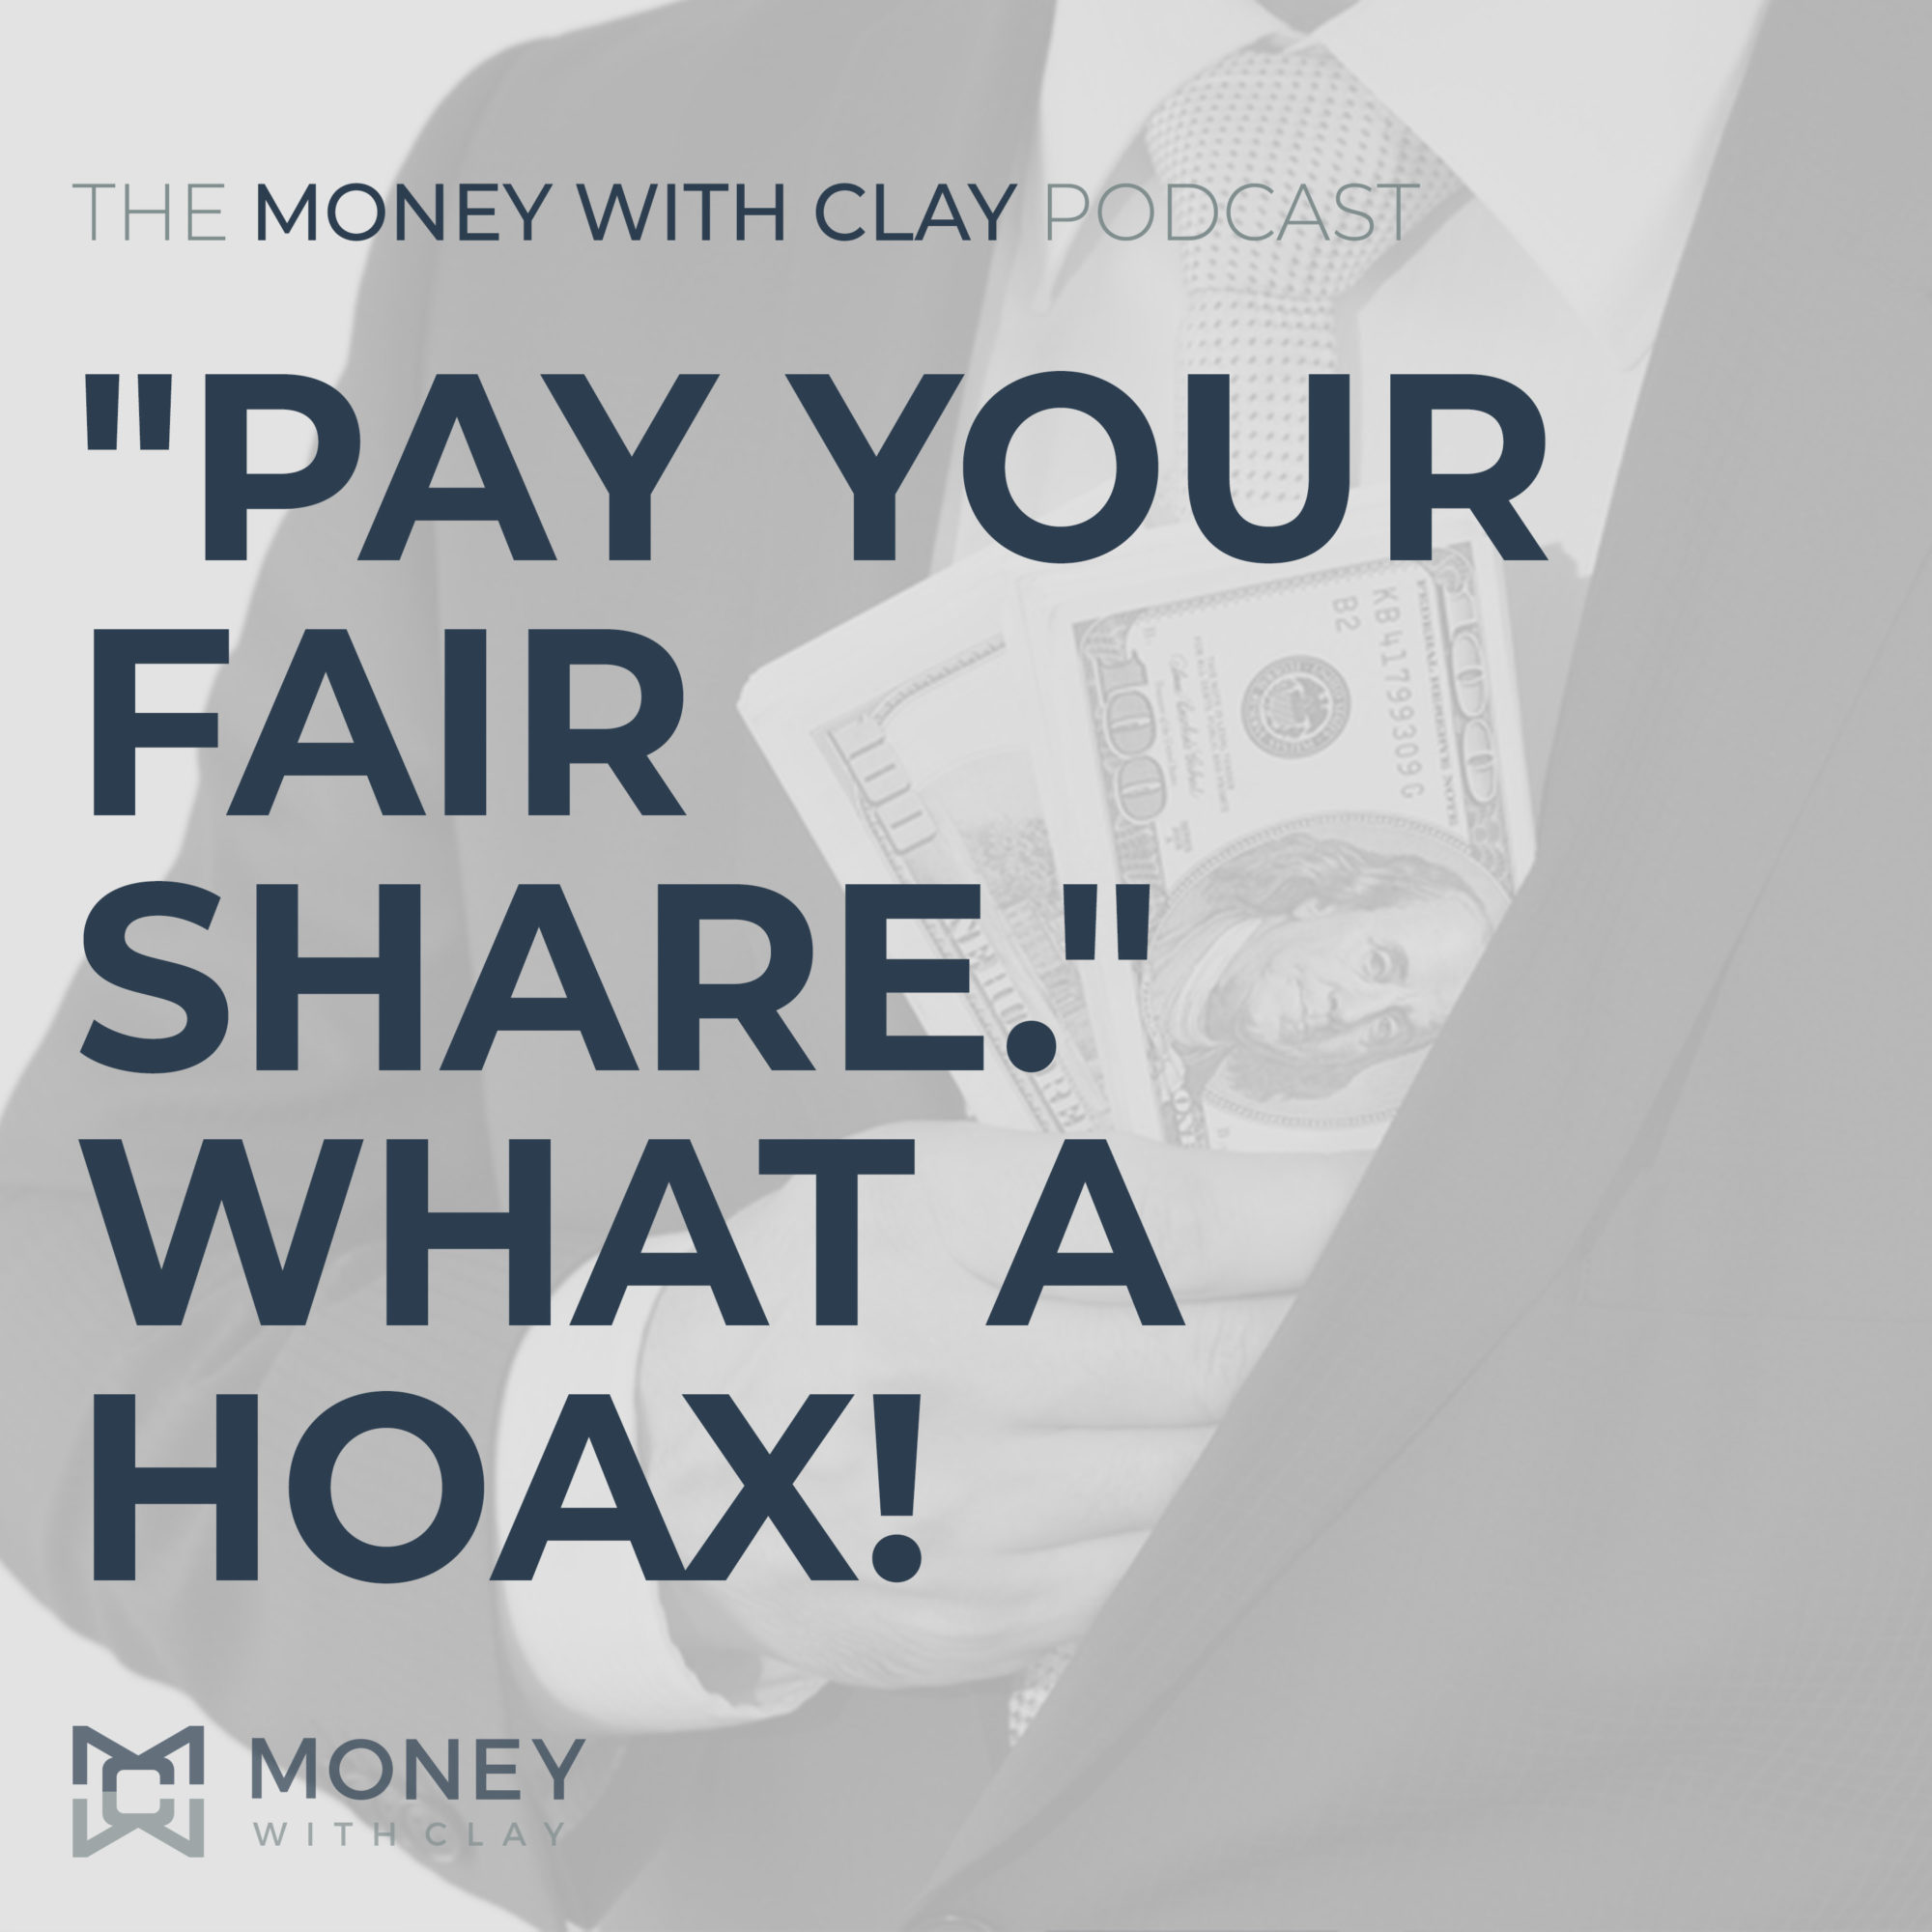 "Pay Your Fair Share." What a Hoax!